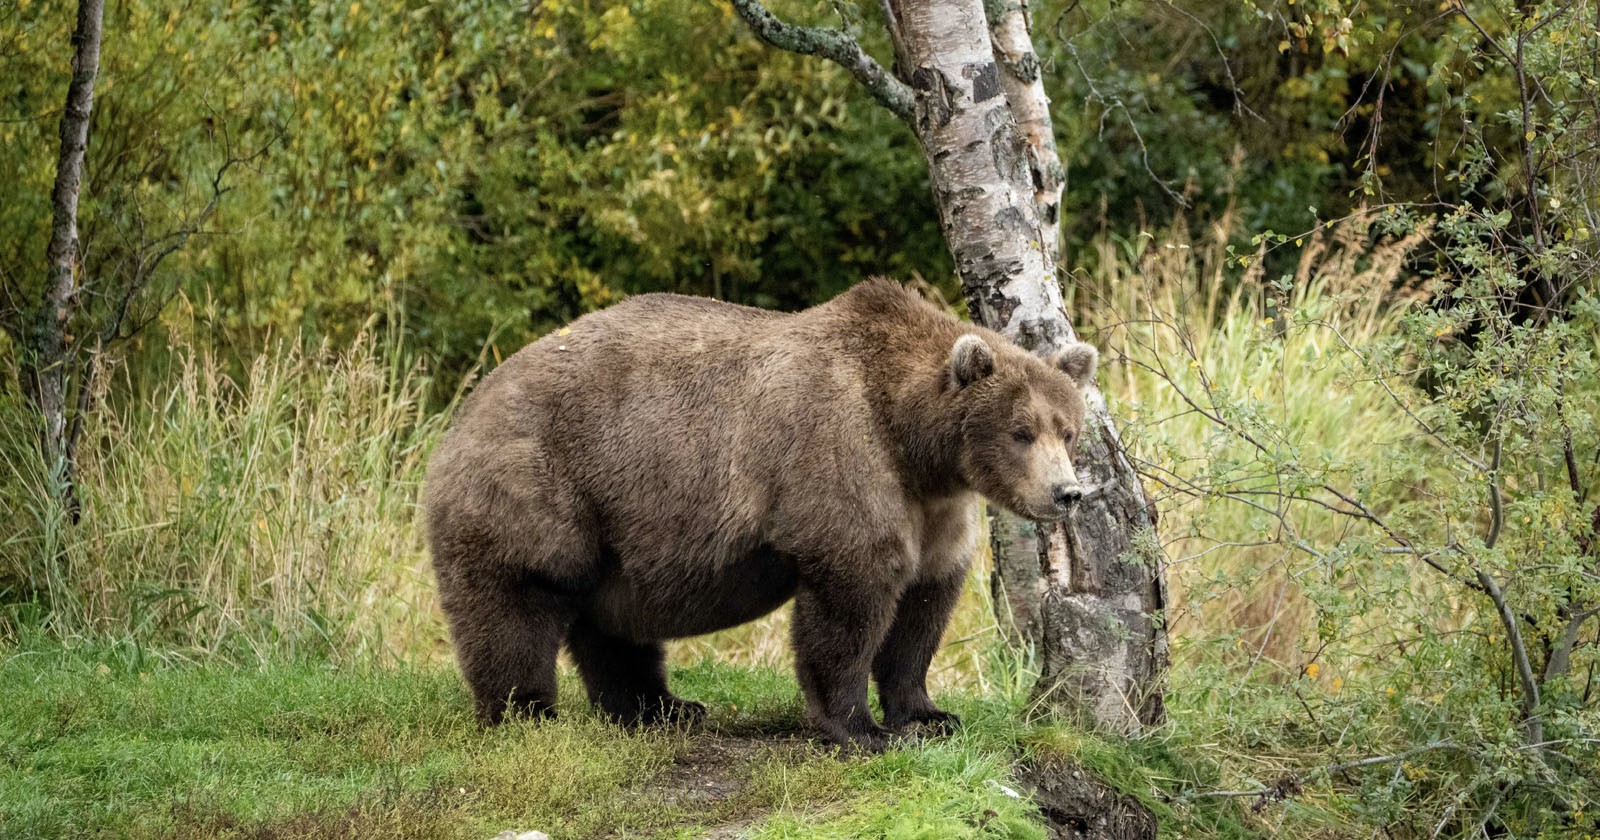  fat bear week celebrates brown bears photos 